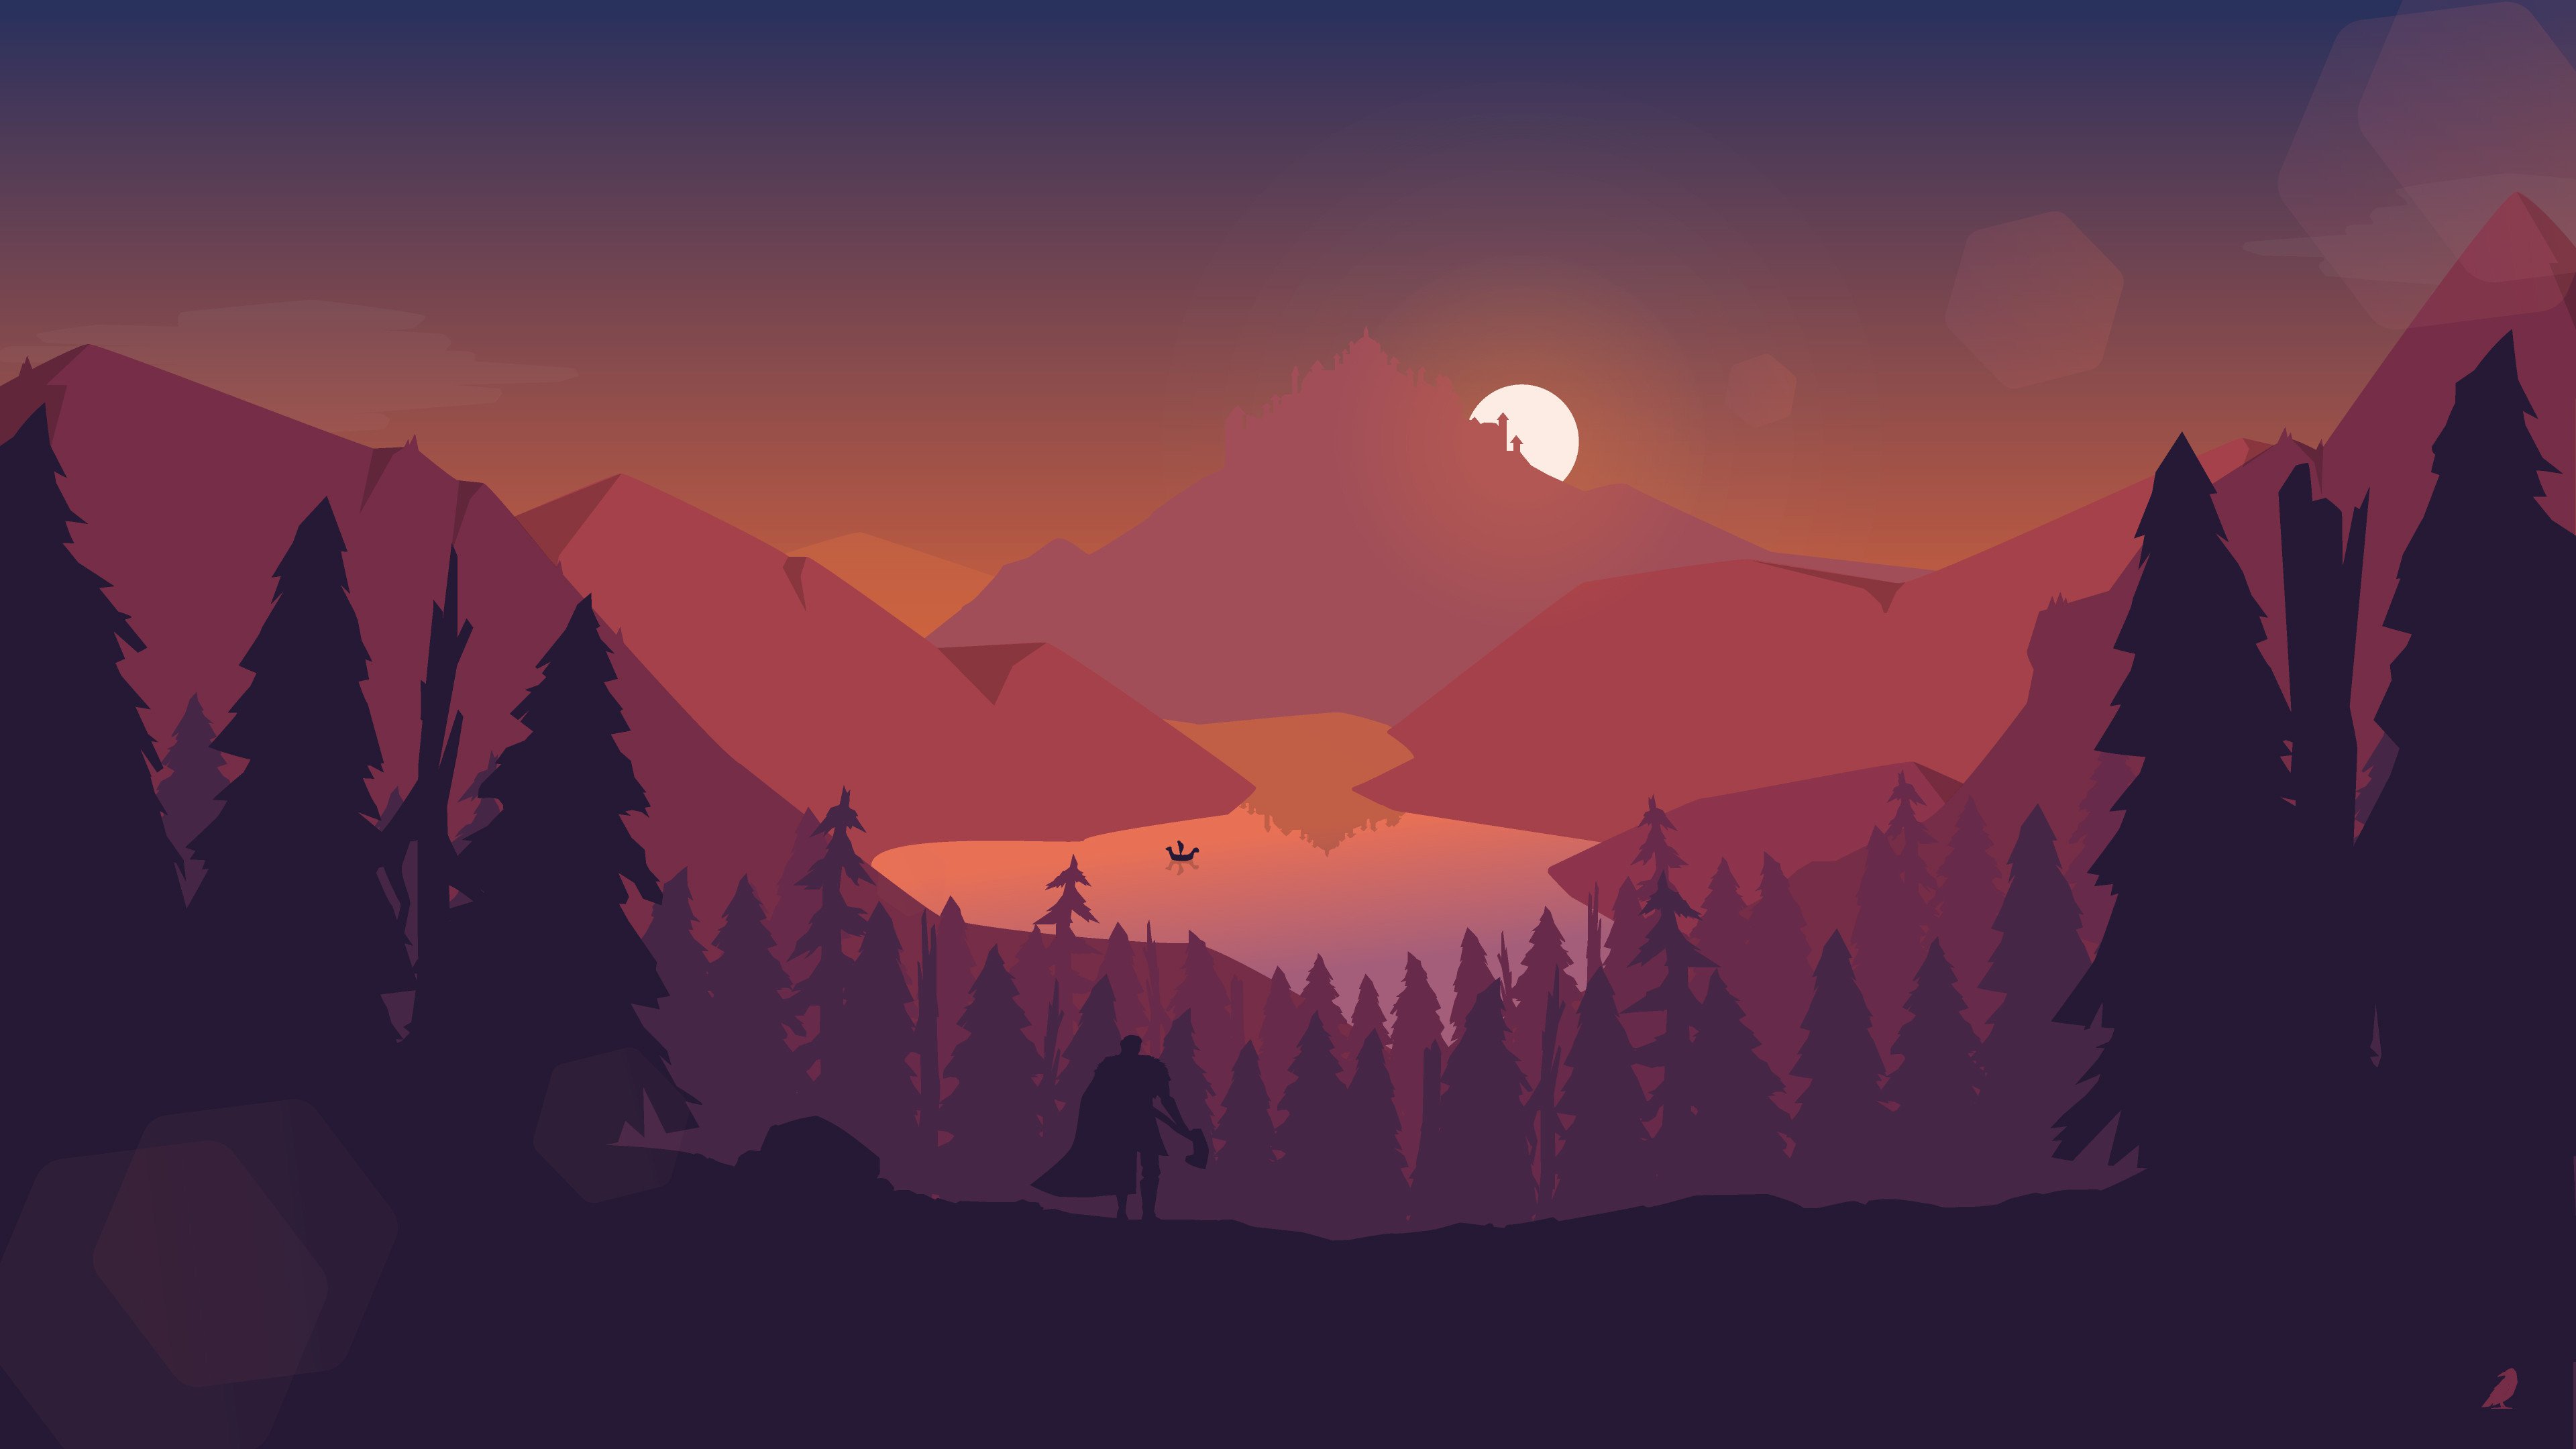 Fondos de pantalla Landscape illustration sunset in the forest mountains